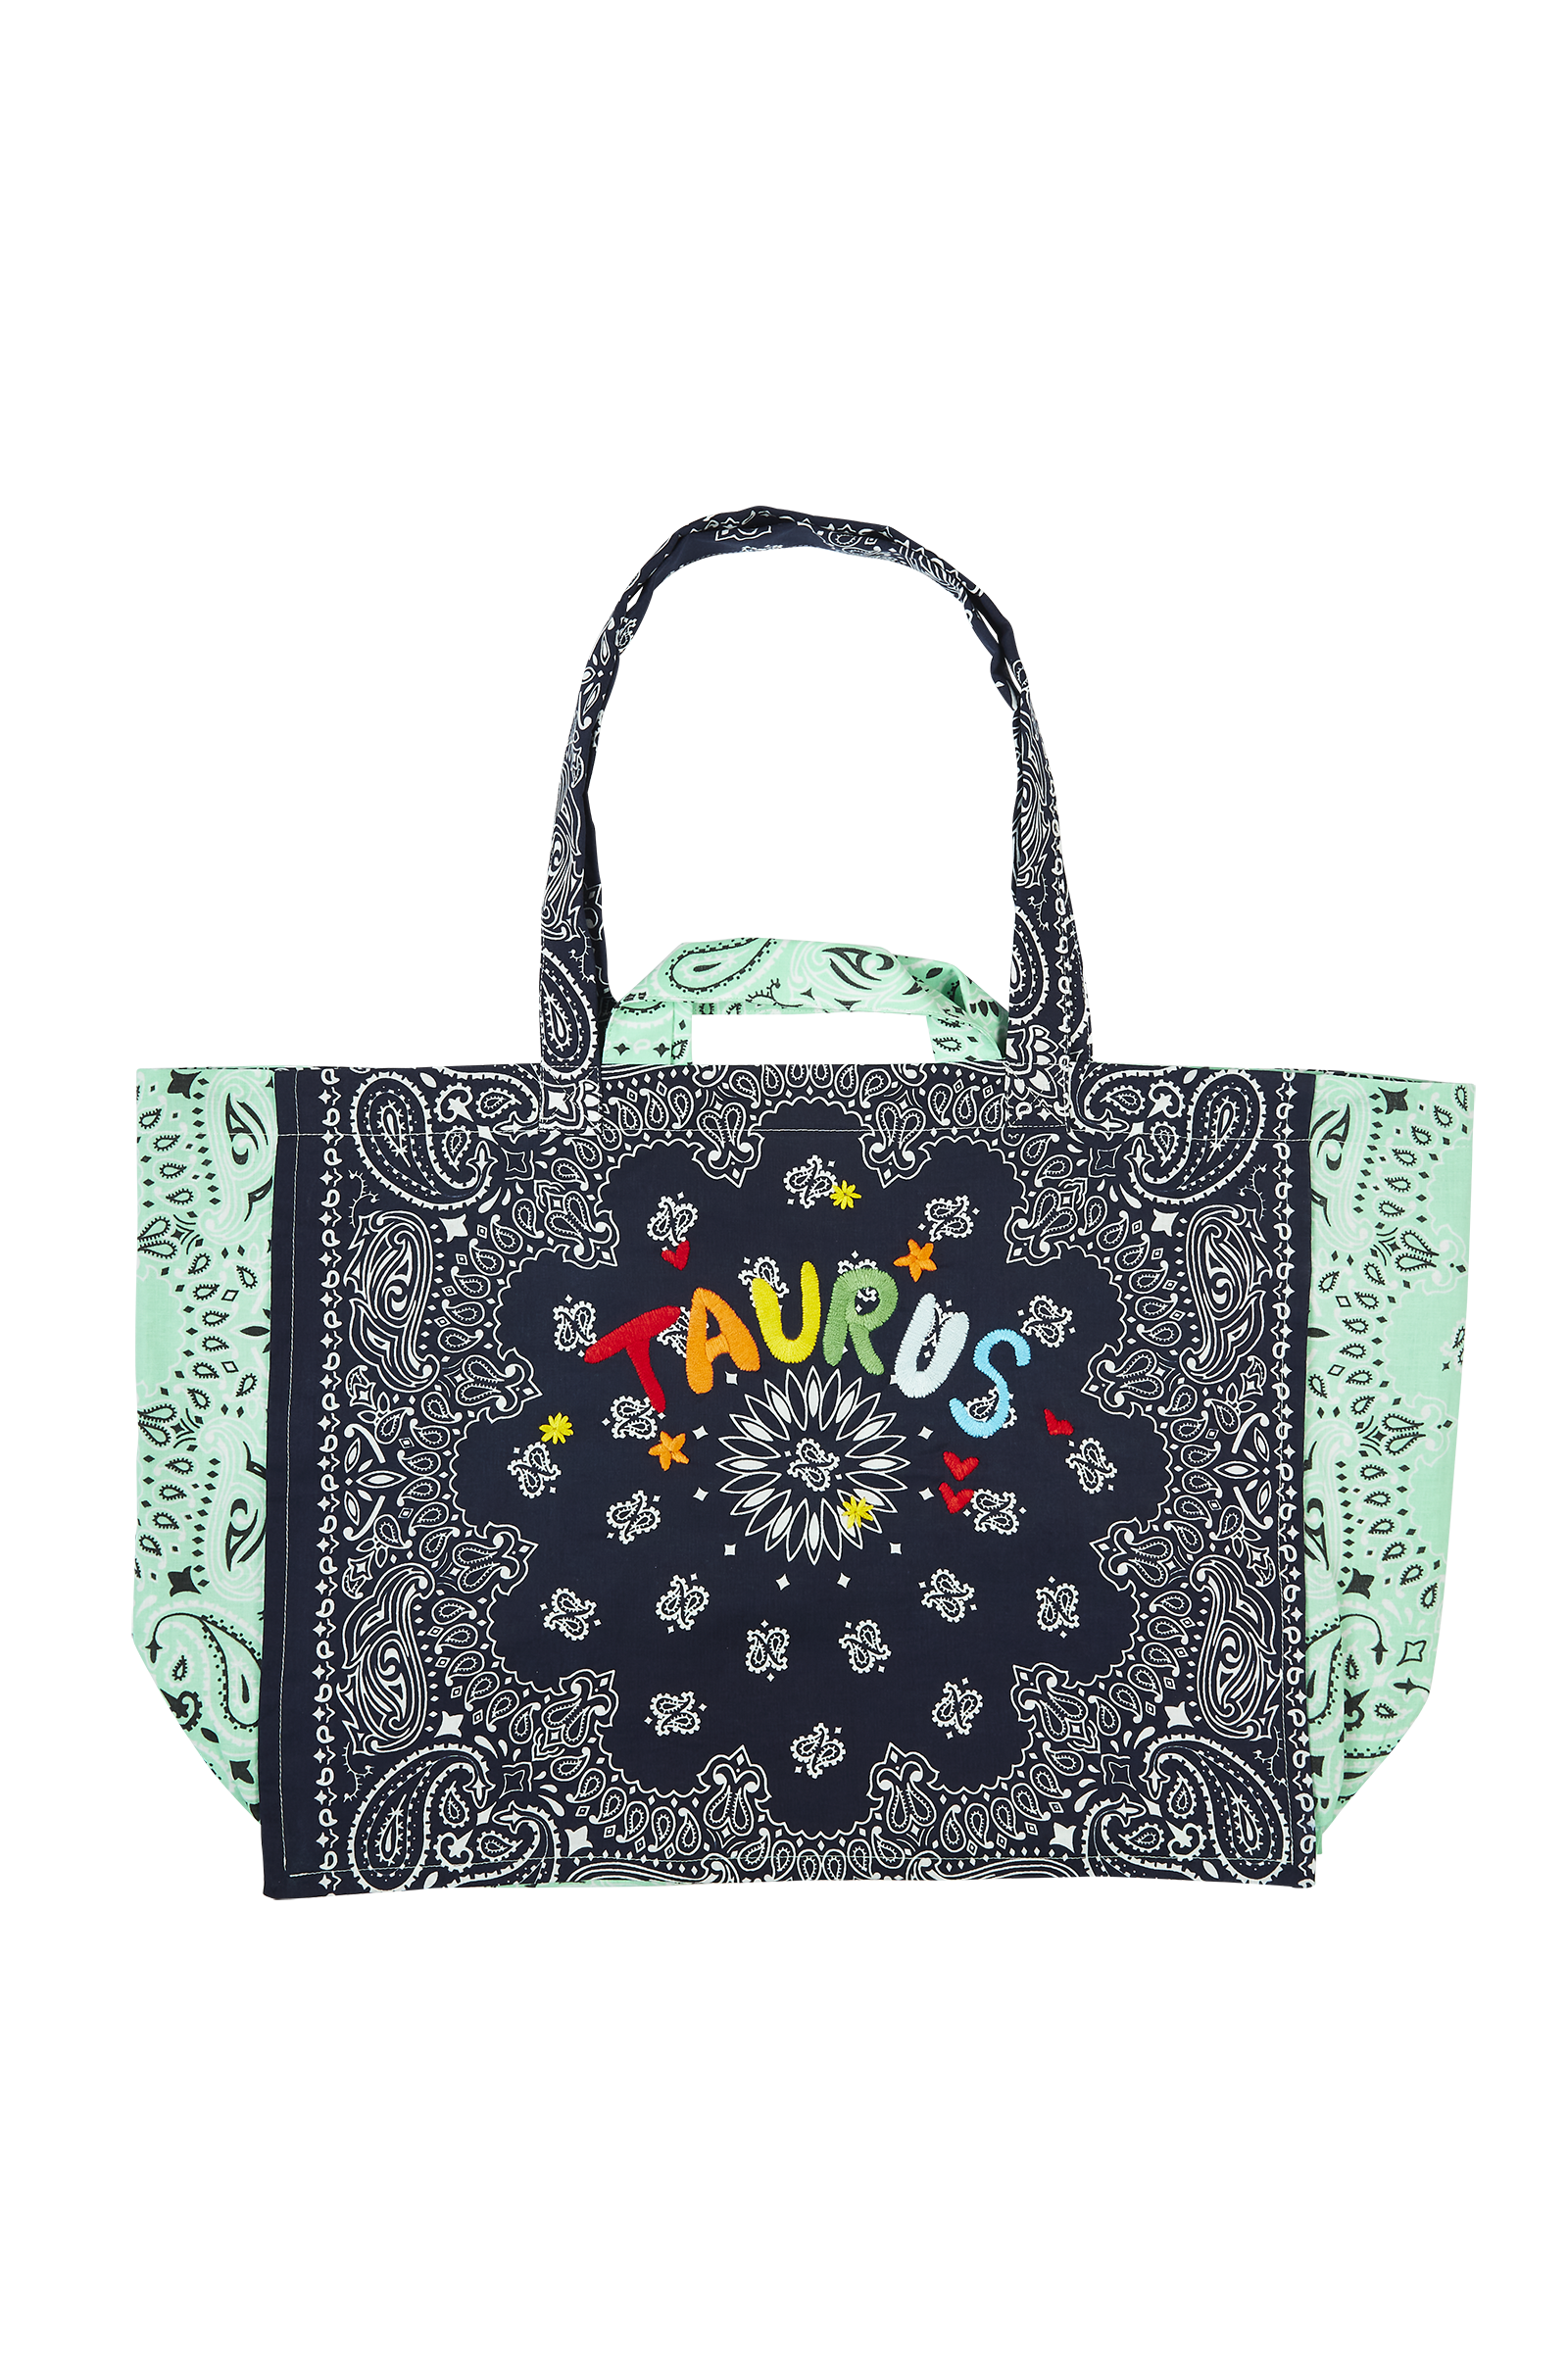 Astrological Bandana Bag 